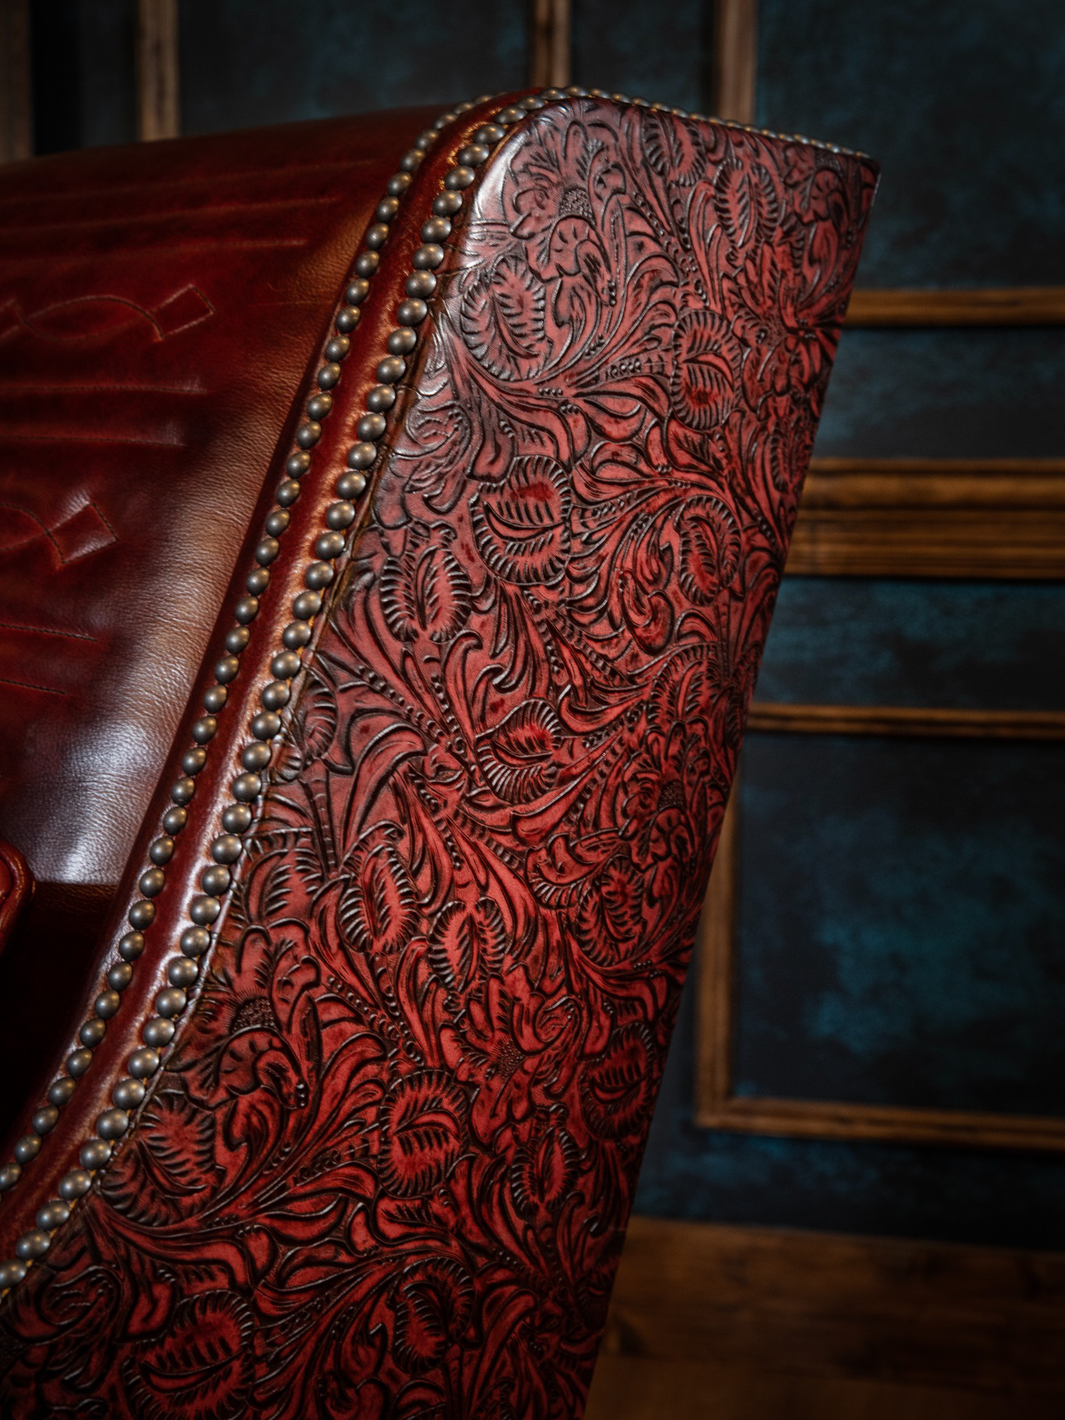 Crimson Quilt Diamond Leather Accent Chair